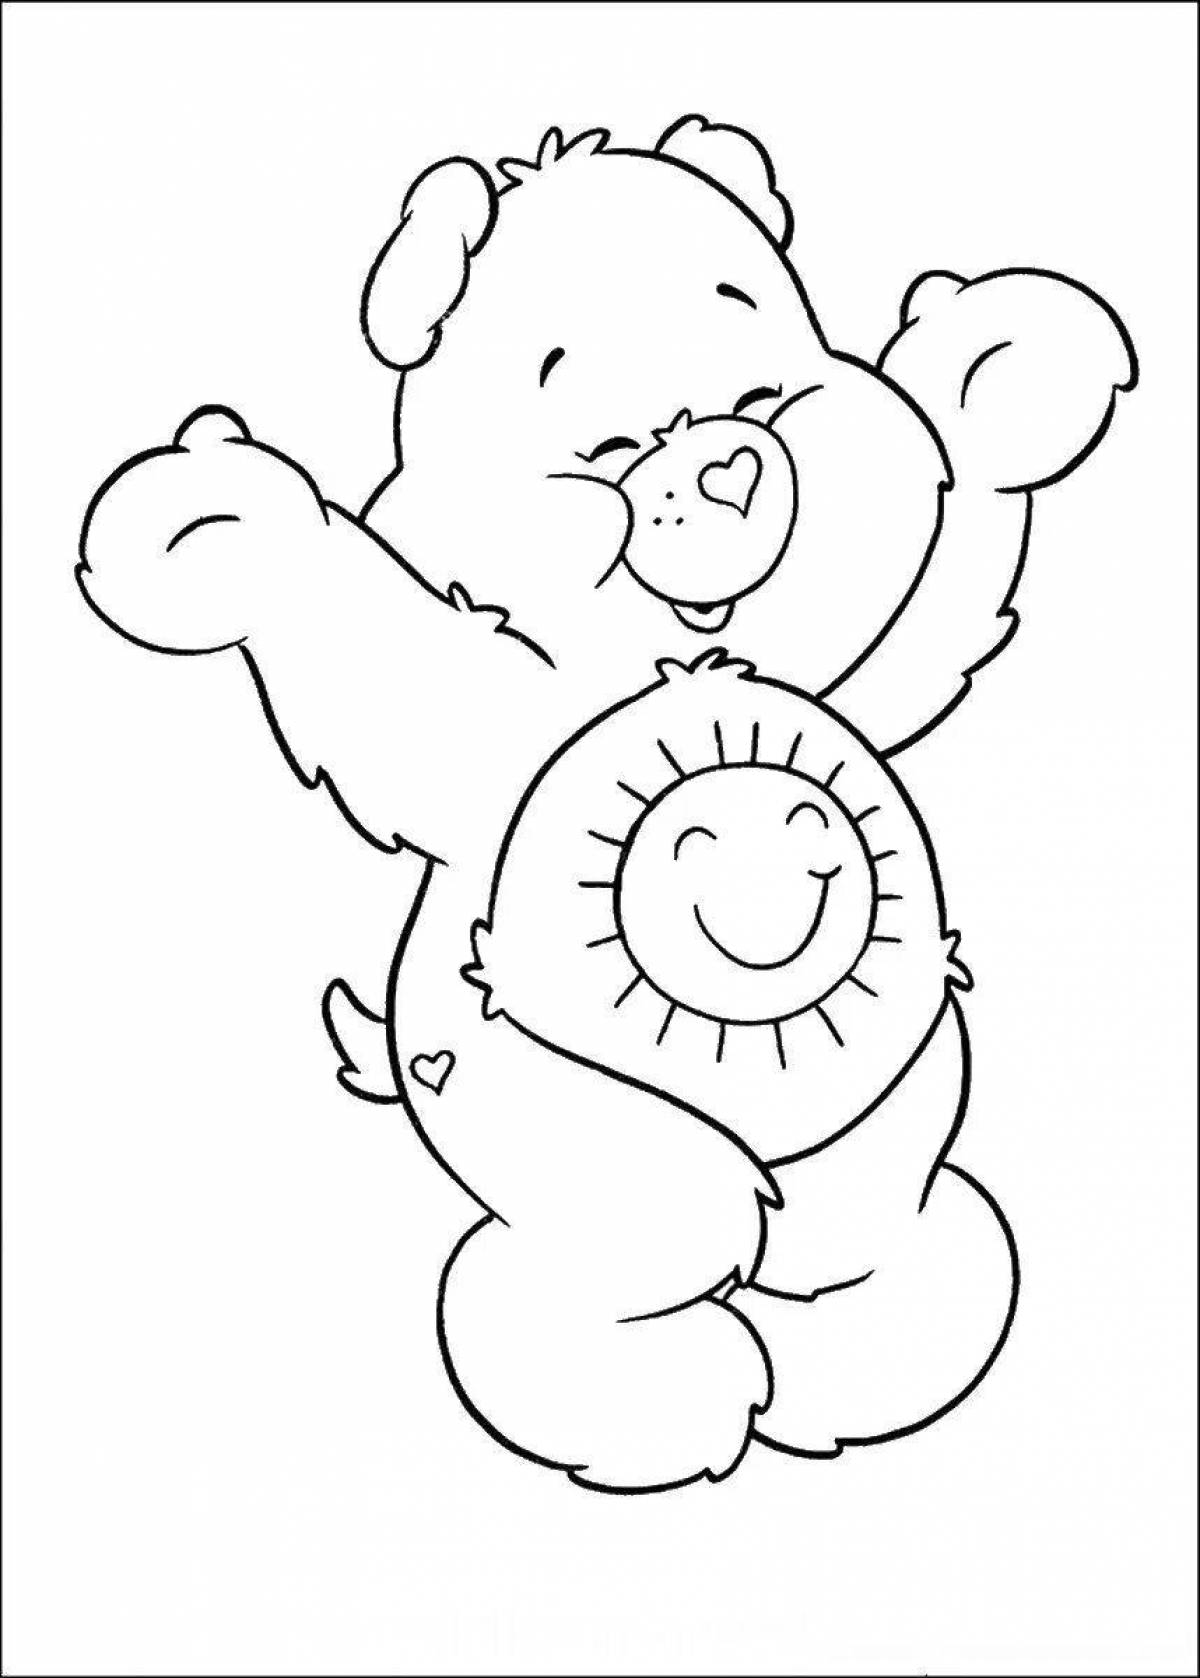 Bright cute teddy bear coloring book